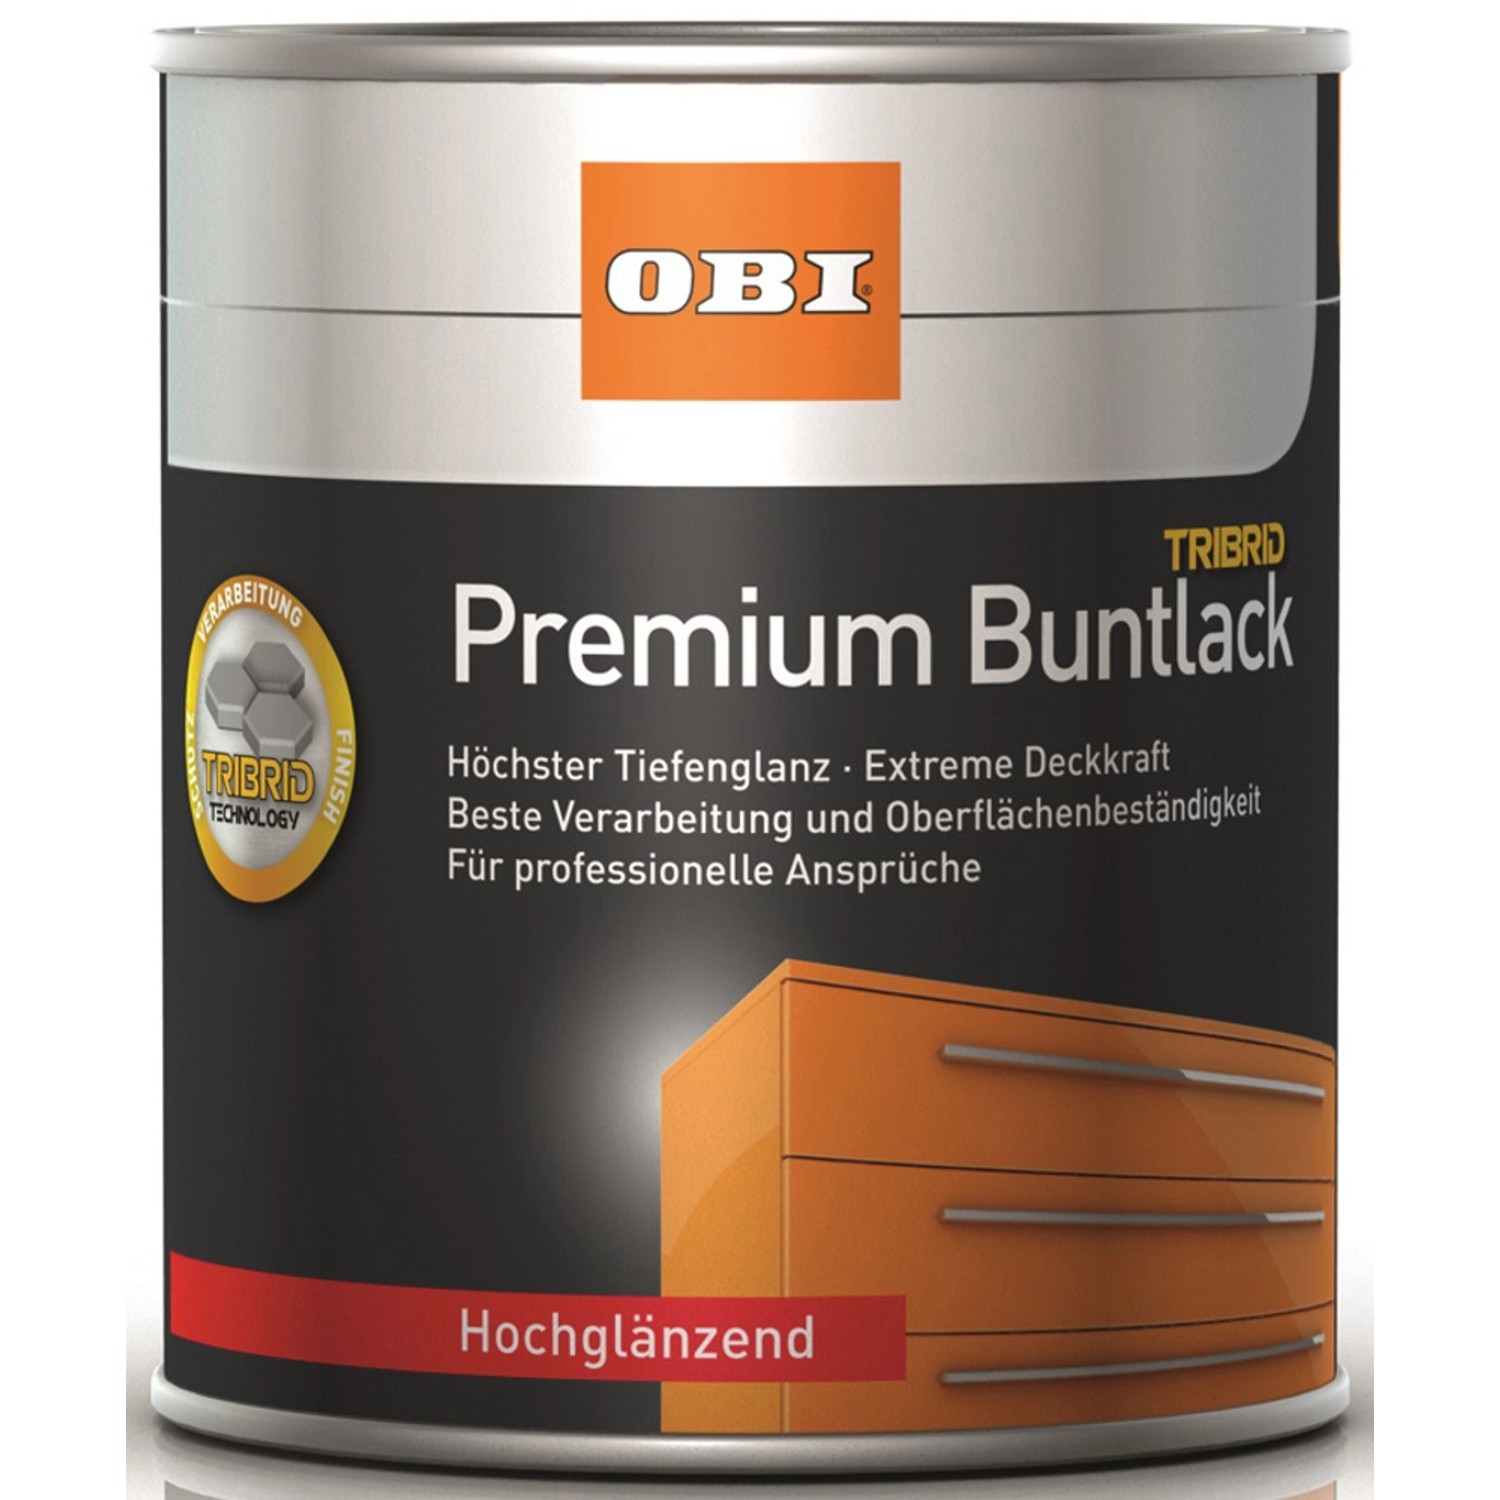 OBI Premium Buntlack Tribrid Rubinrot hochglänzend 375 ml von OBI